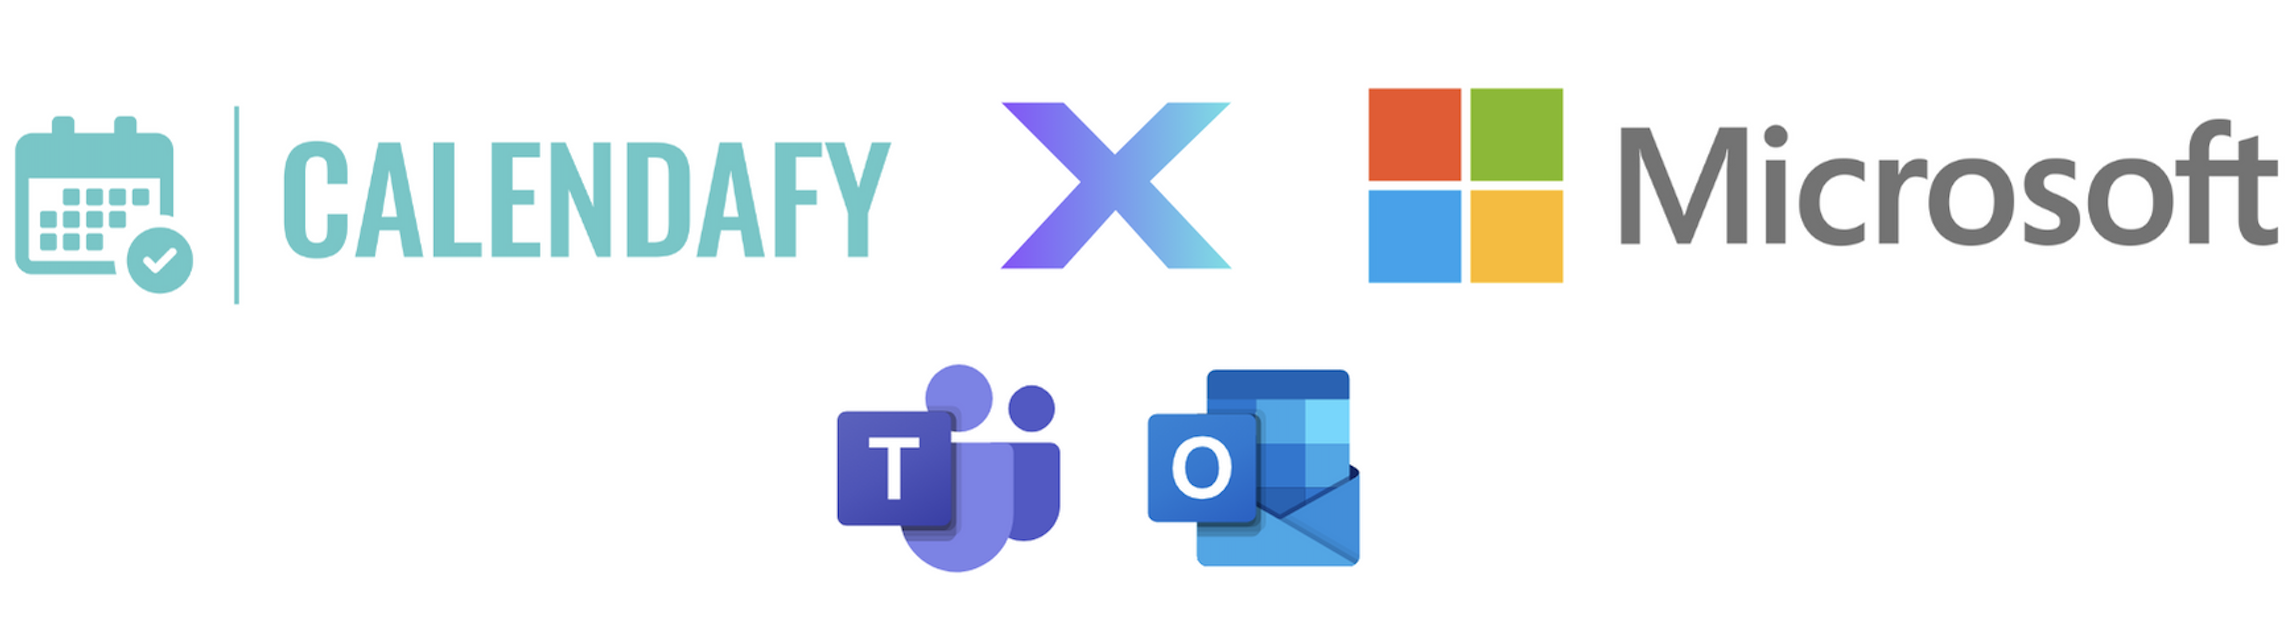 Calendafy_Microsoft_Logos